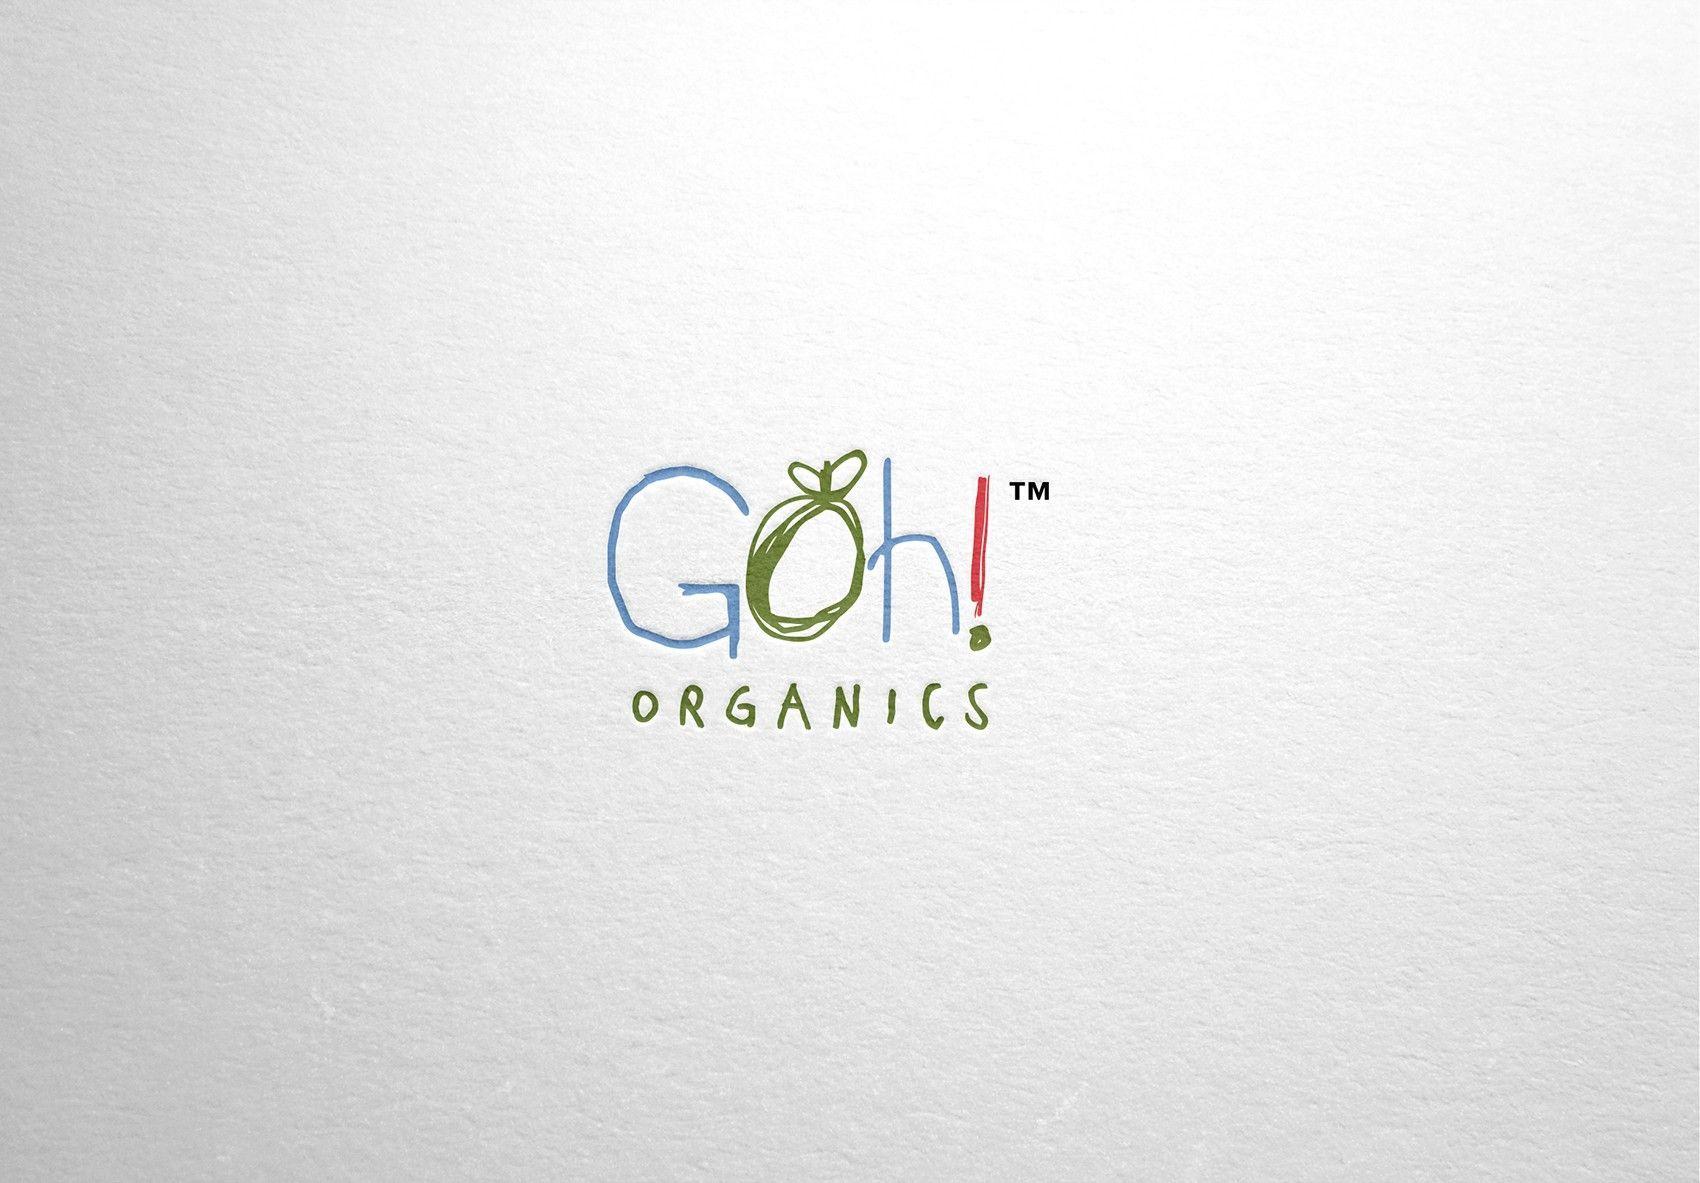 Baby Food Brand Logo - Organic logo for baby food brand | 99designs | logo | Pinterest ...